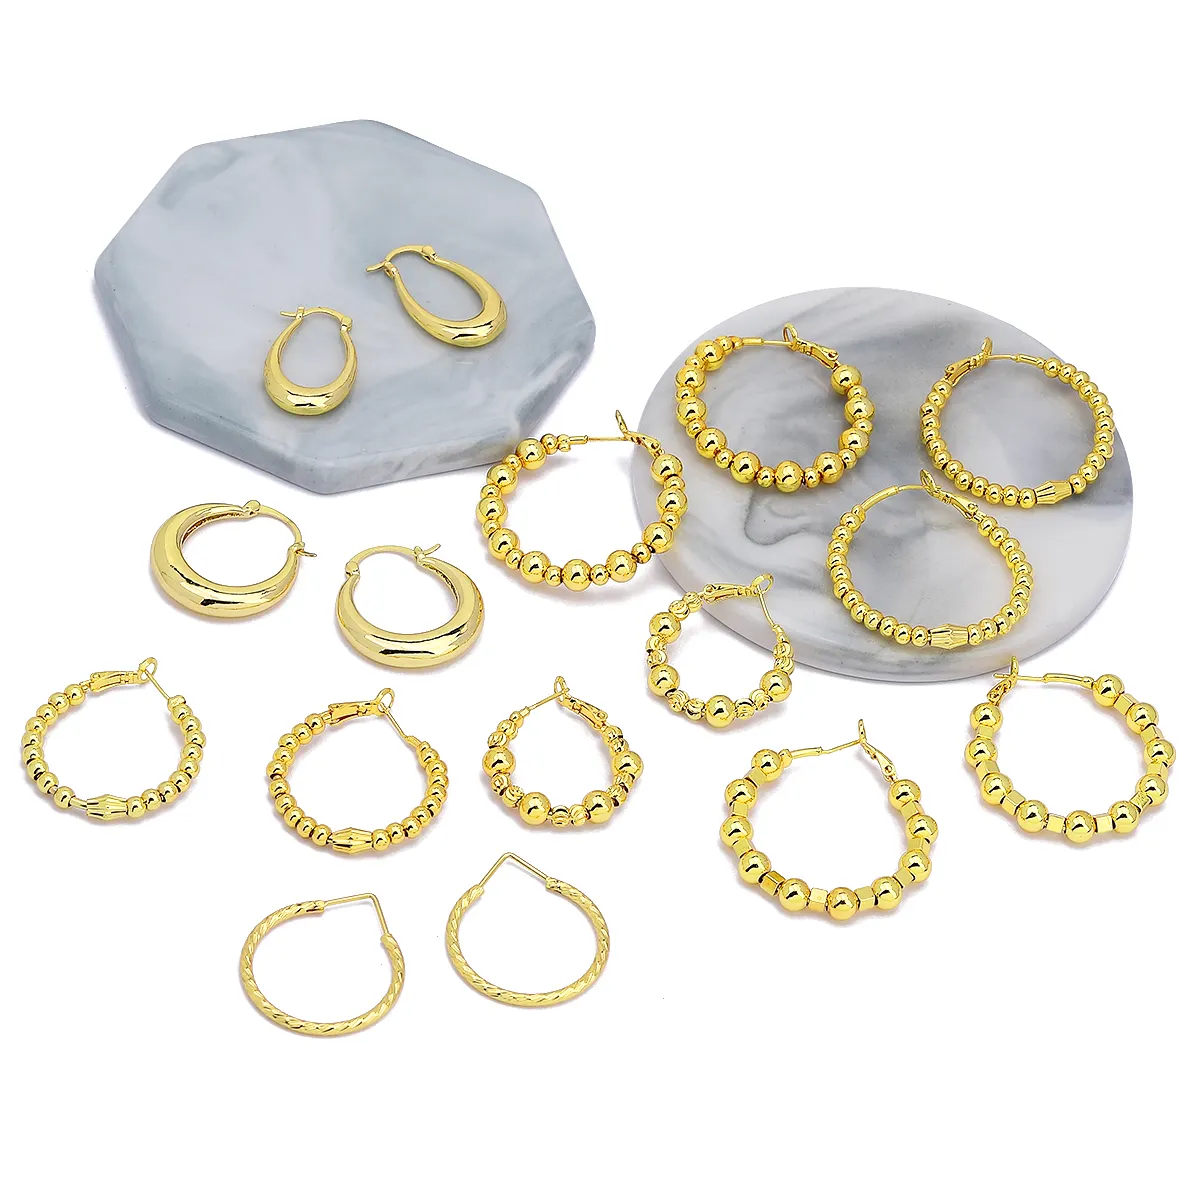 Jxx תכשיטים סיטונאי אופנה עיצוב עגול פליז בציפוי זהב 24 קראט מיני האג'י חישוק טיפת קסם עגיל לנשים